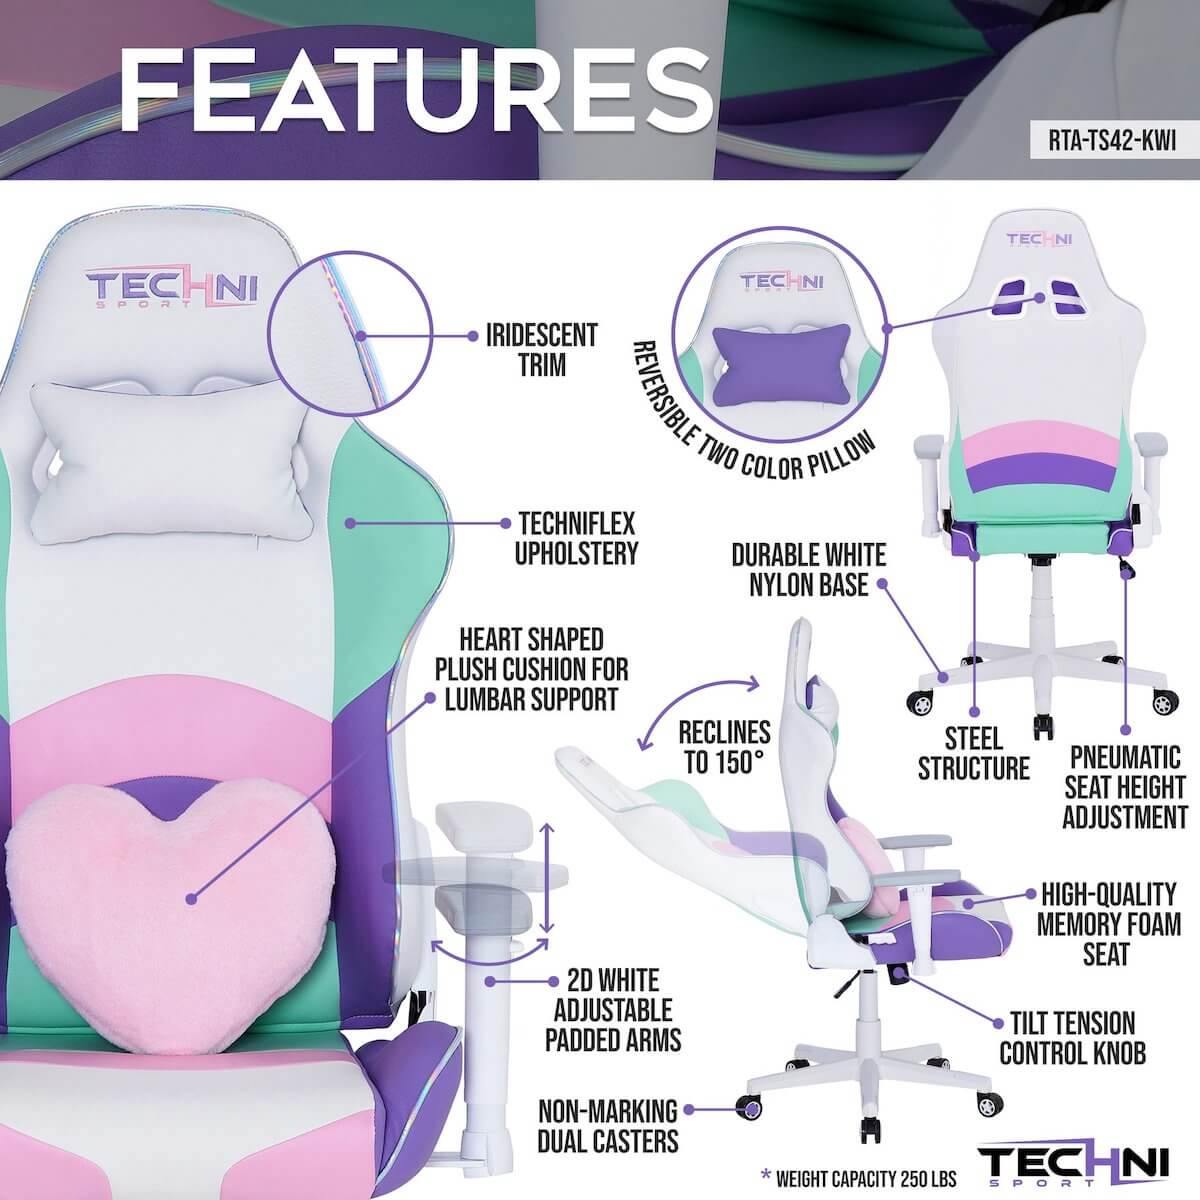 Techni Sport TS-42 Kawaii Office-PC Gaming Chair RTA-TS42-KWI Features